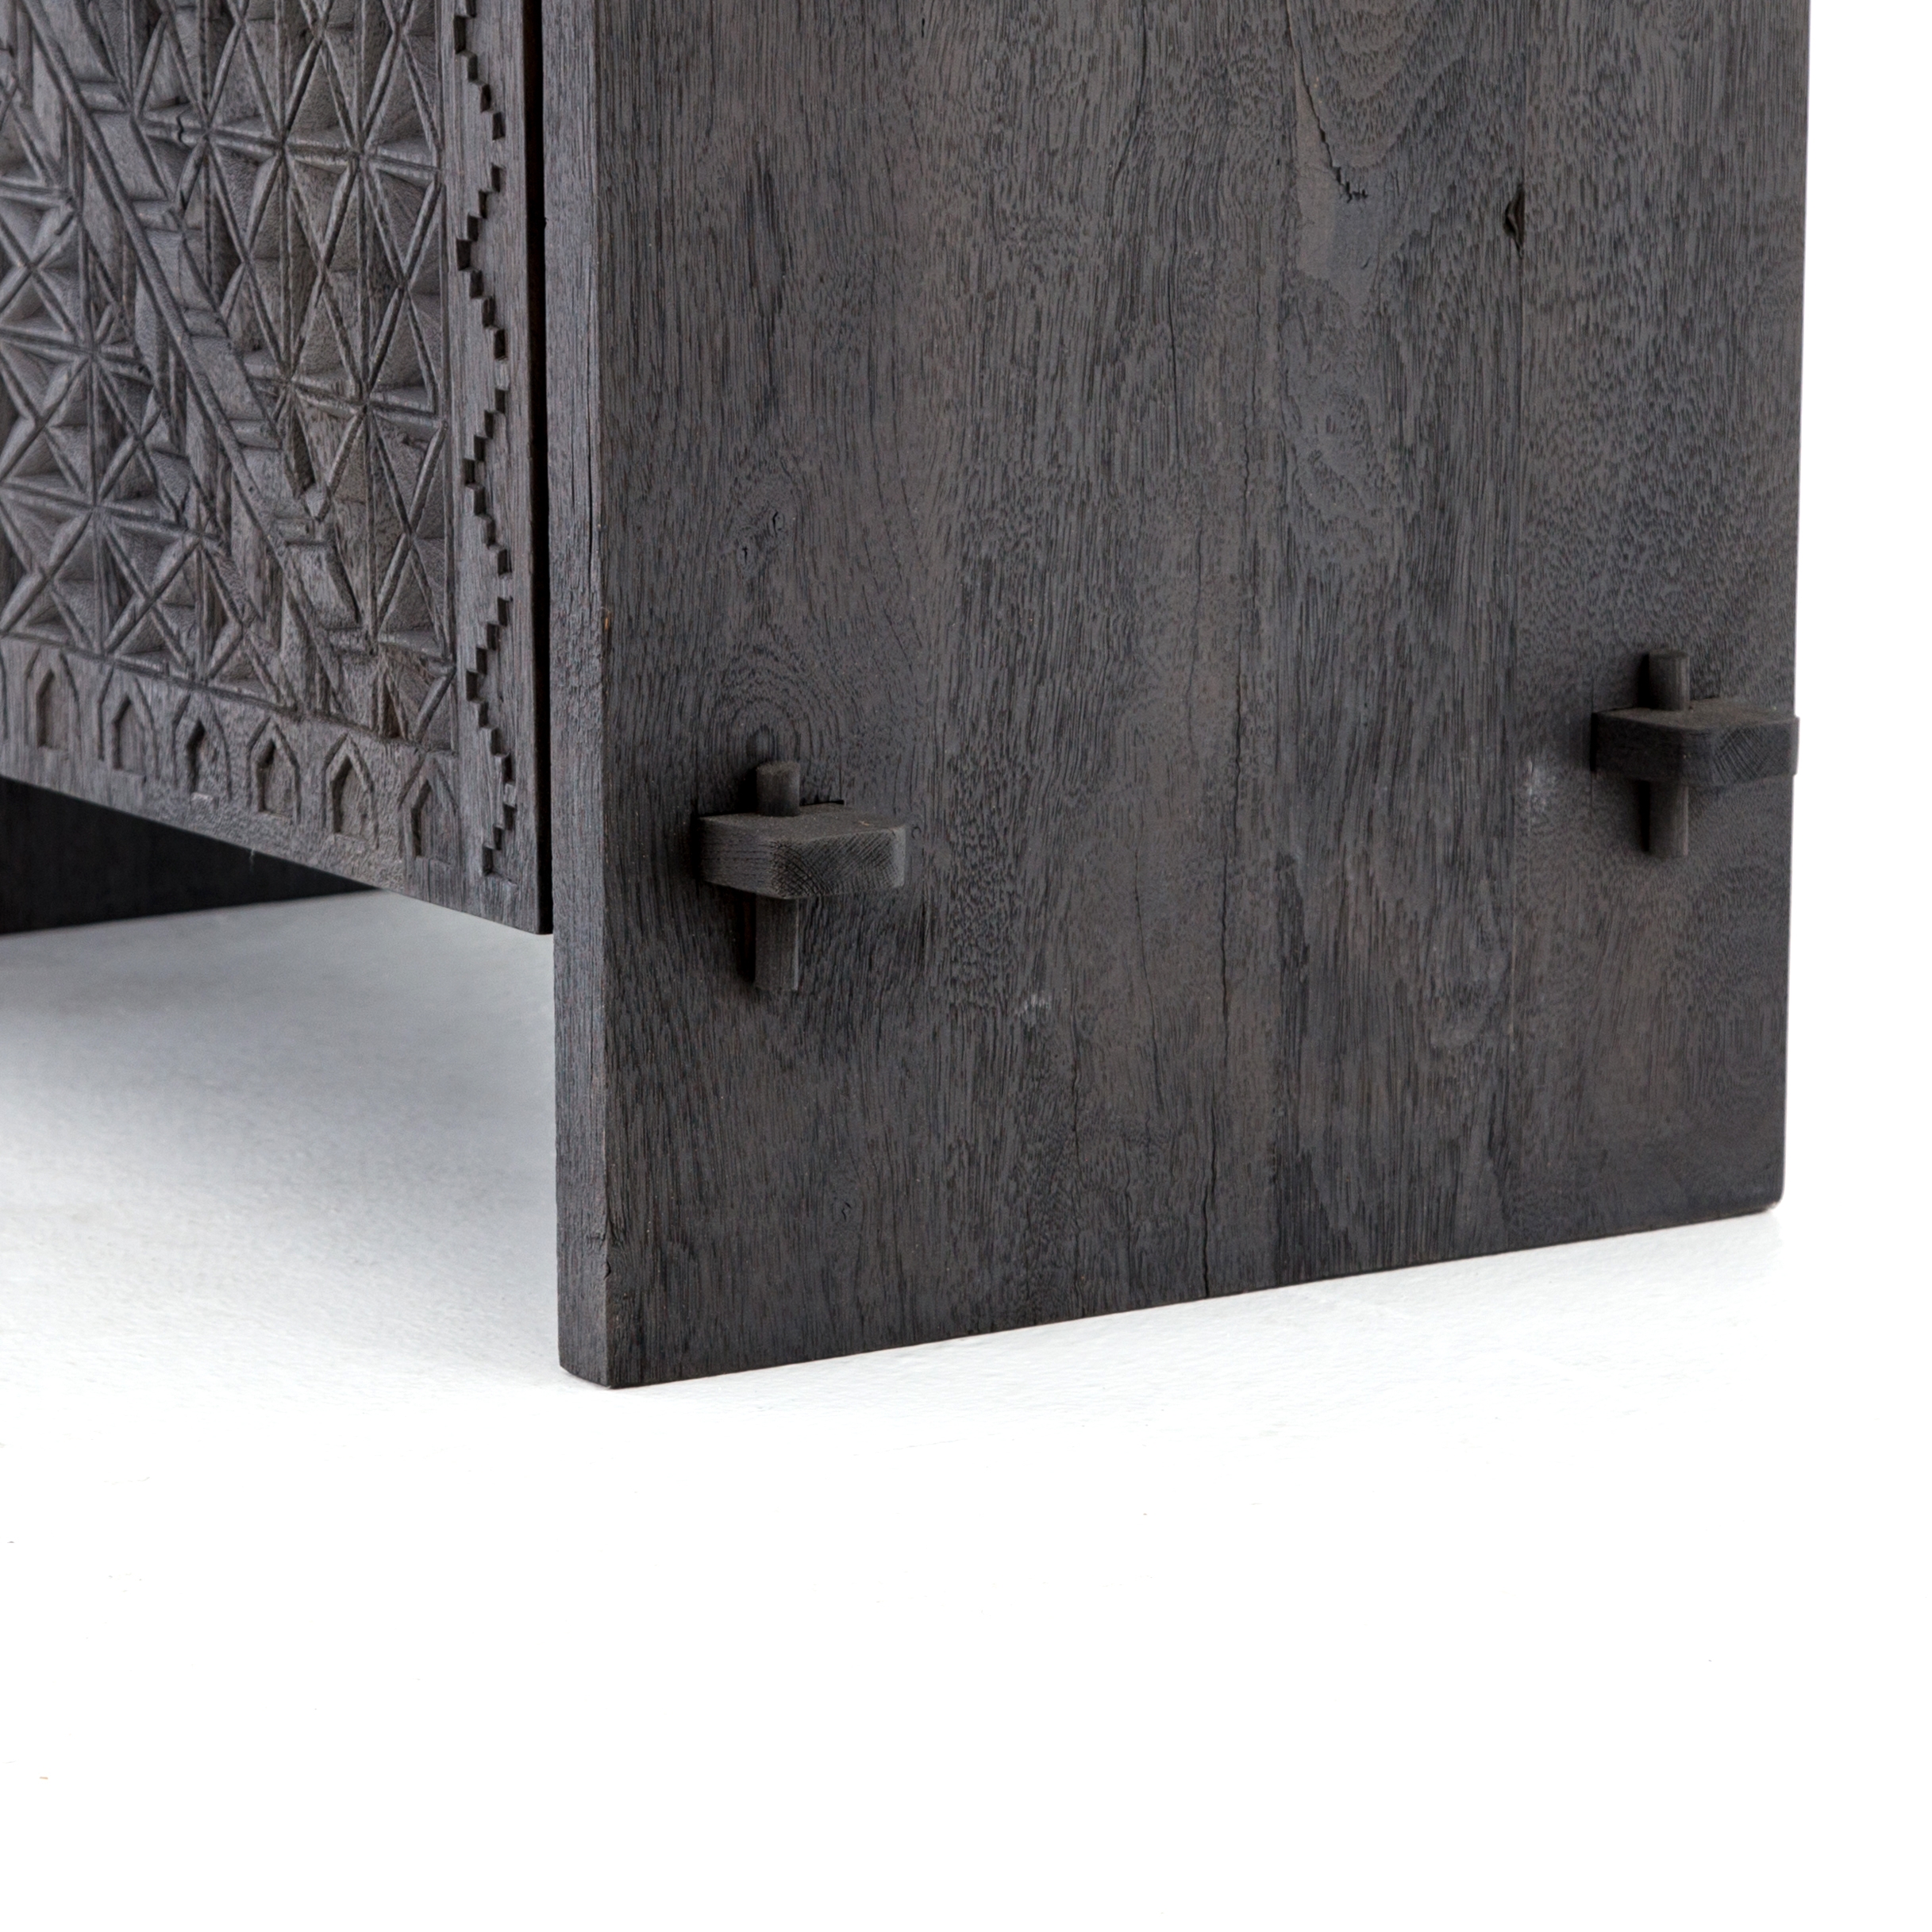 Nahala Small Sideboard, Dark Totem - Image 8